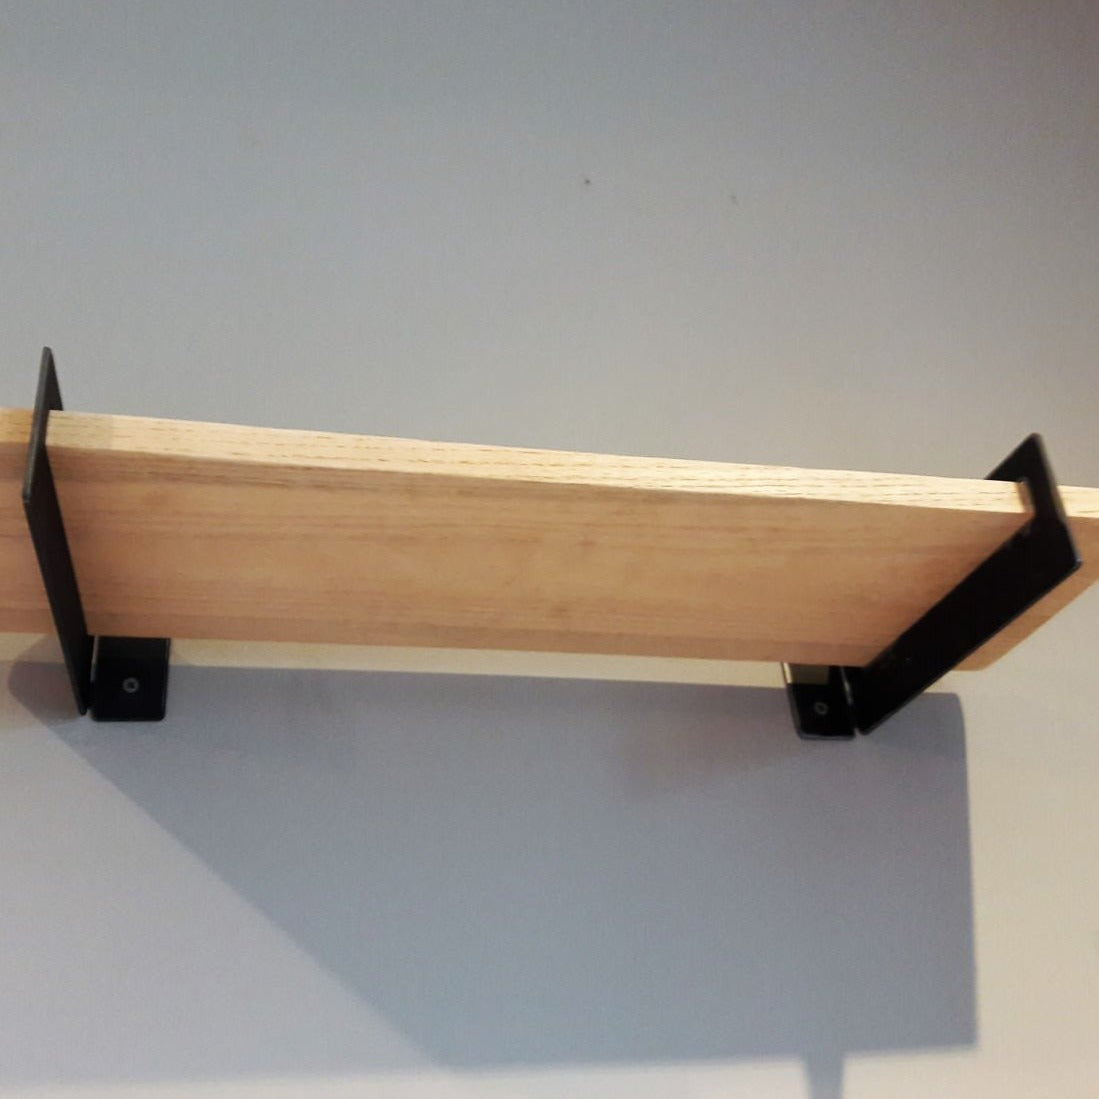 Standard Shelf Brackets (2 Piece Set)